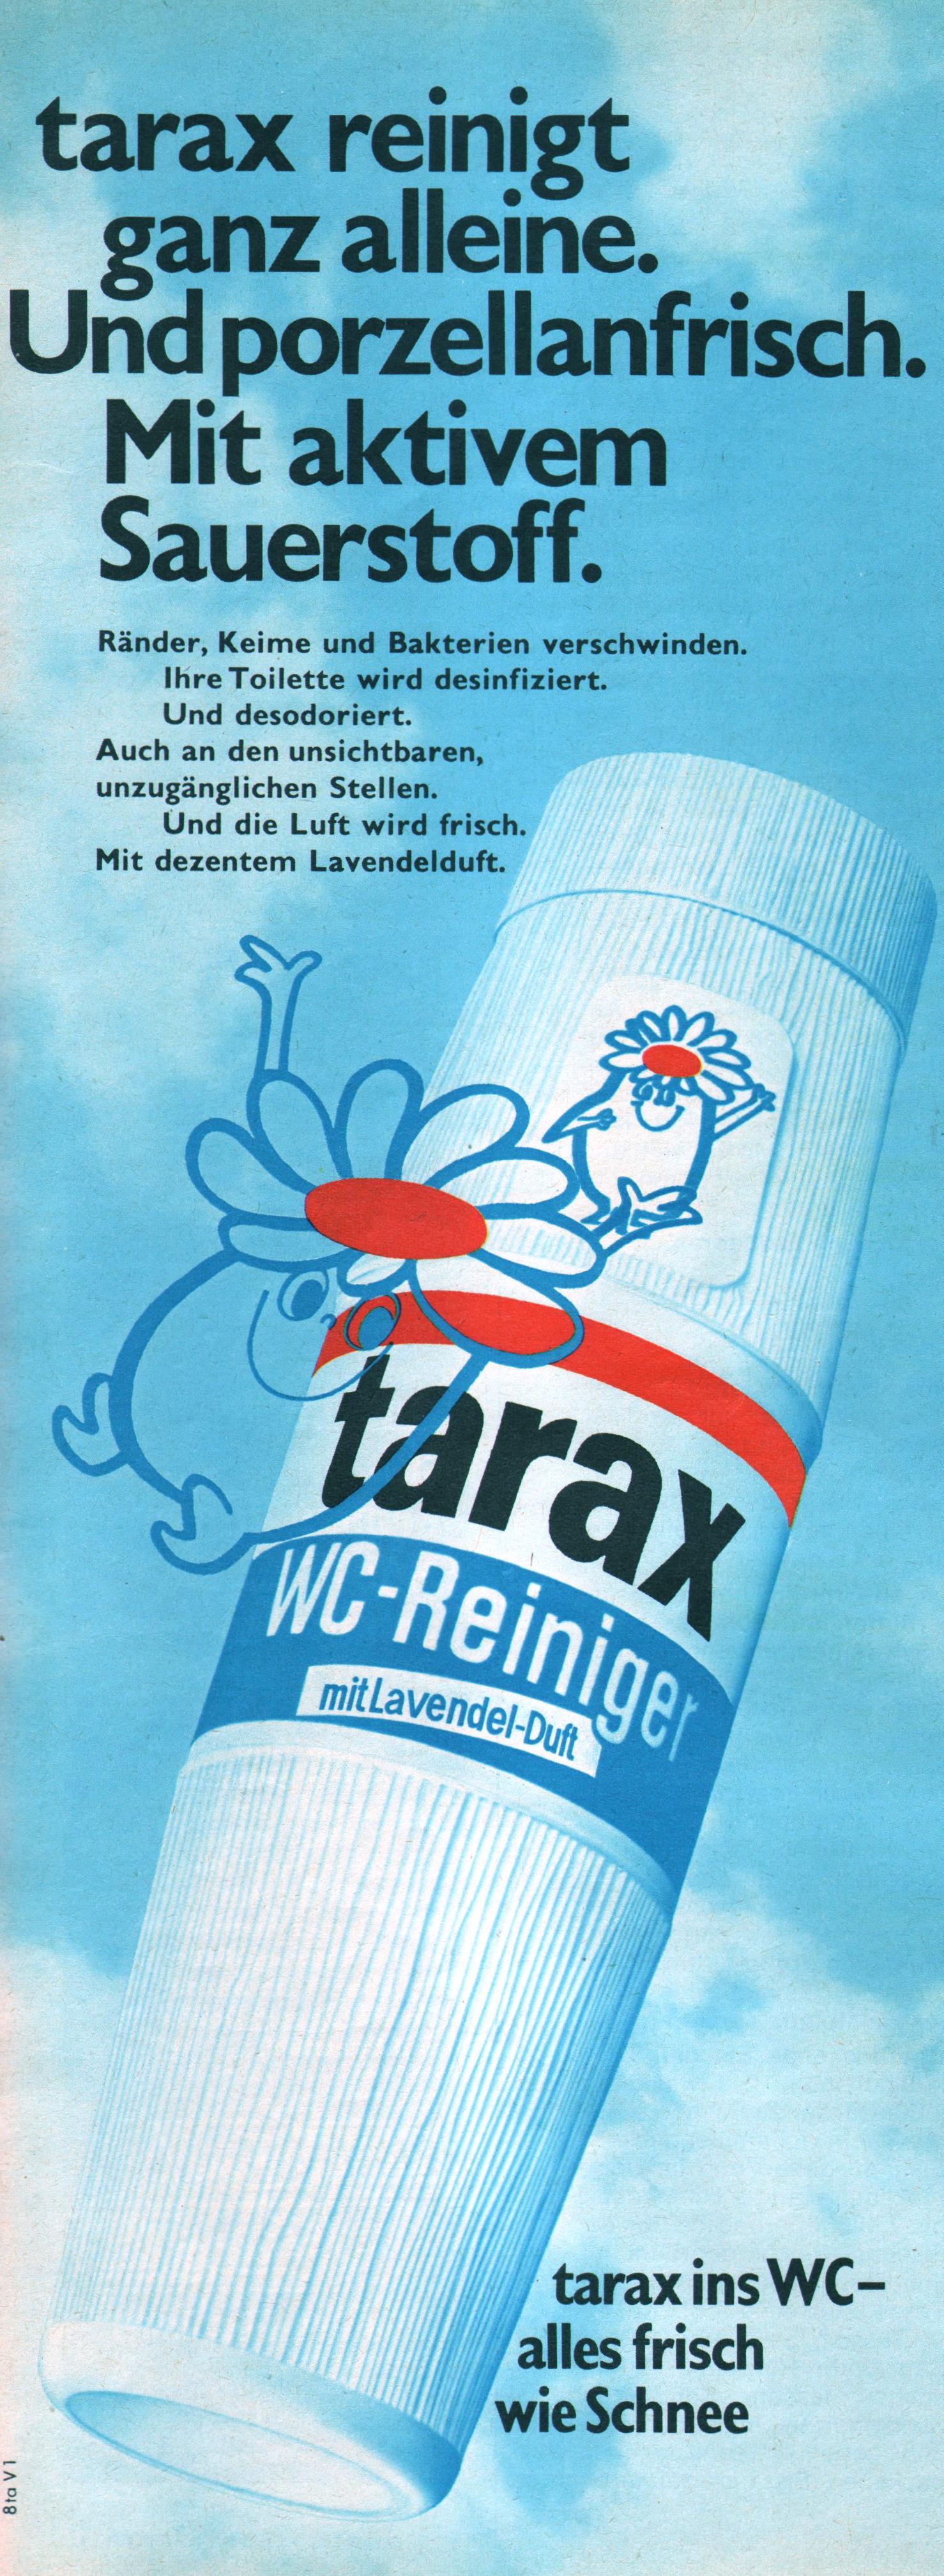 Tarax 1968 0.jpg